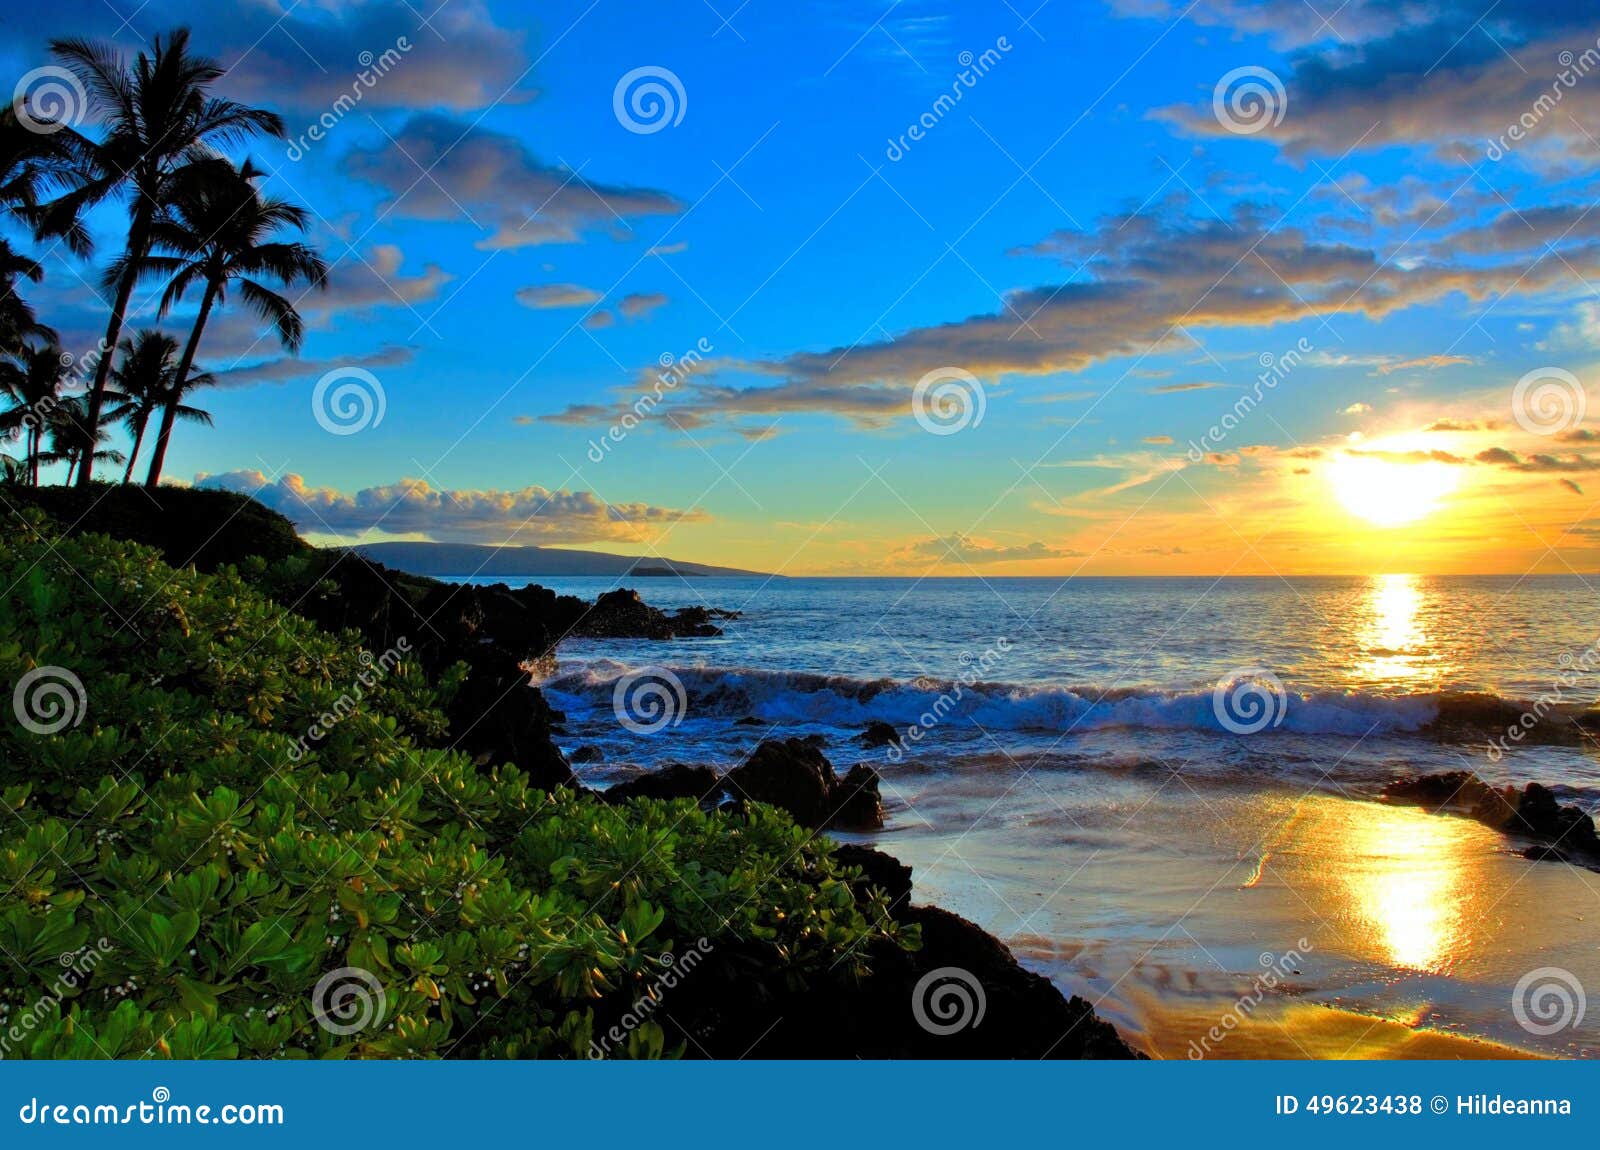 maui hawaii beach sunset with palm trees